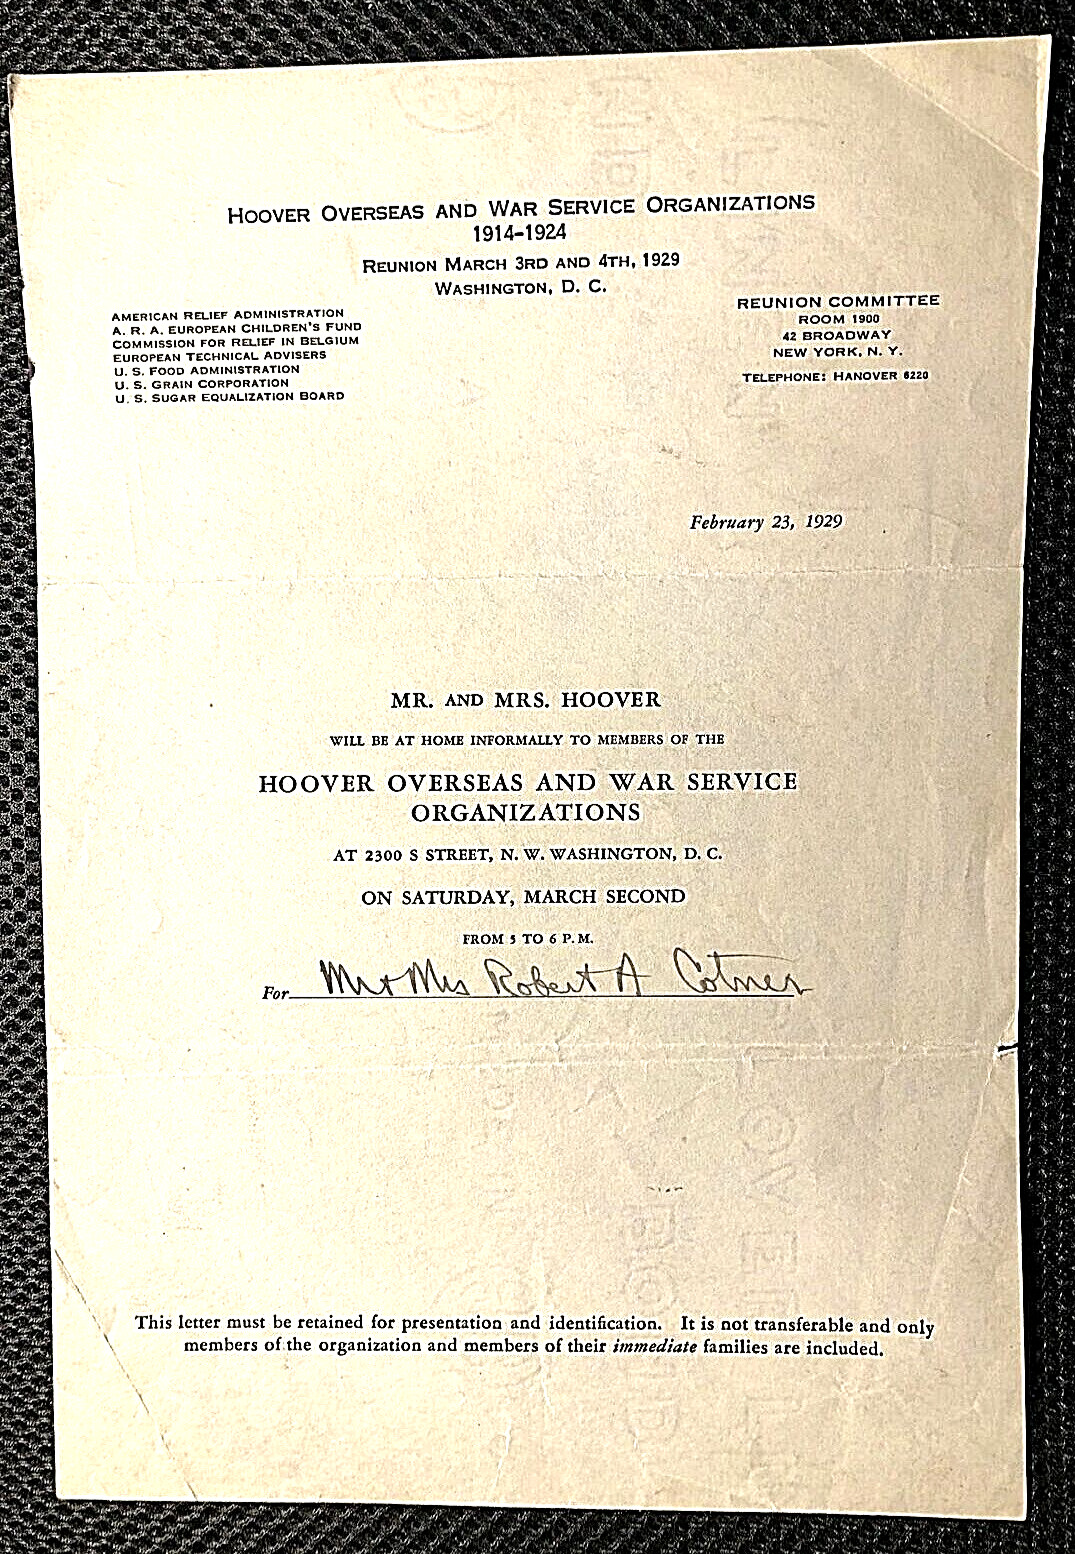 HERBERT HOOVER VERY RARE ORIGINAL 1929 INVITATION TO VISIT HIM AT HIS HOME